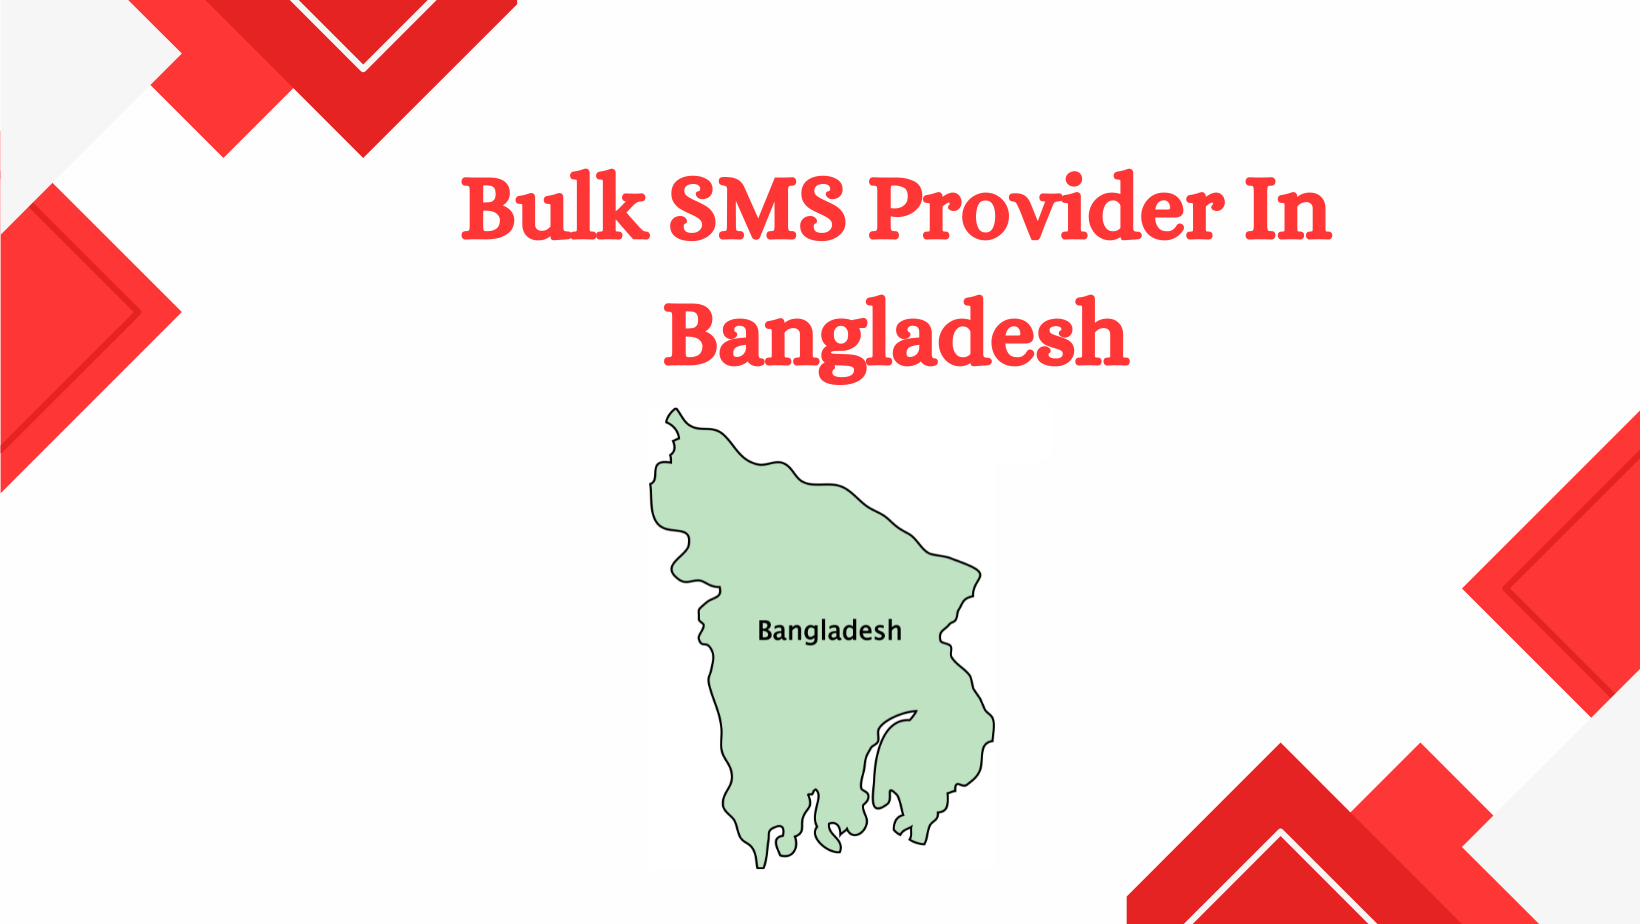 Bulk SMS Provider In Bangladesh